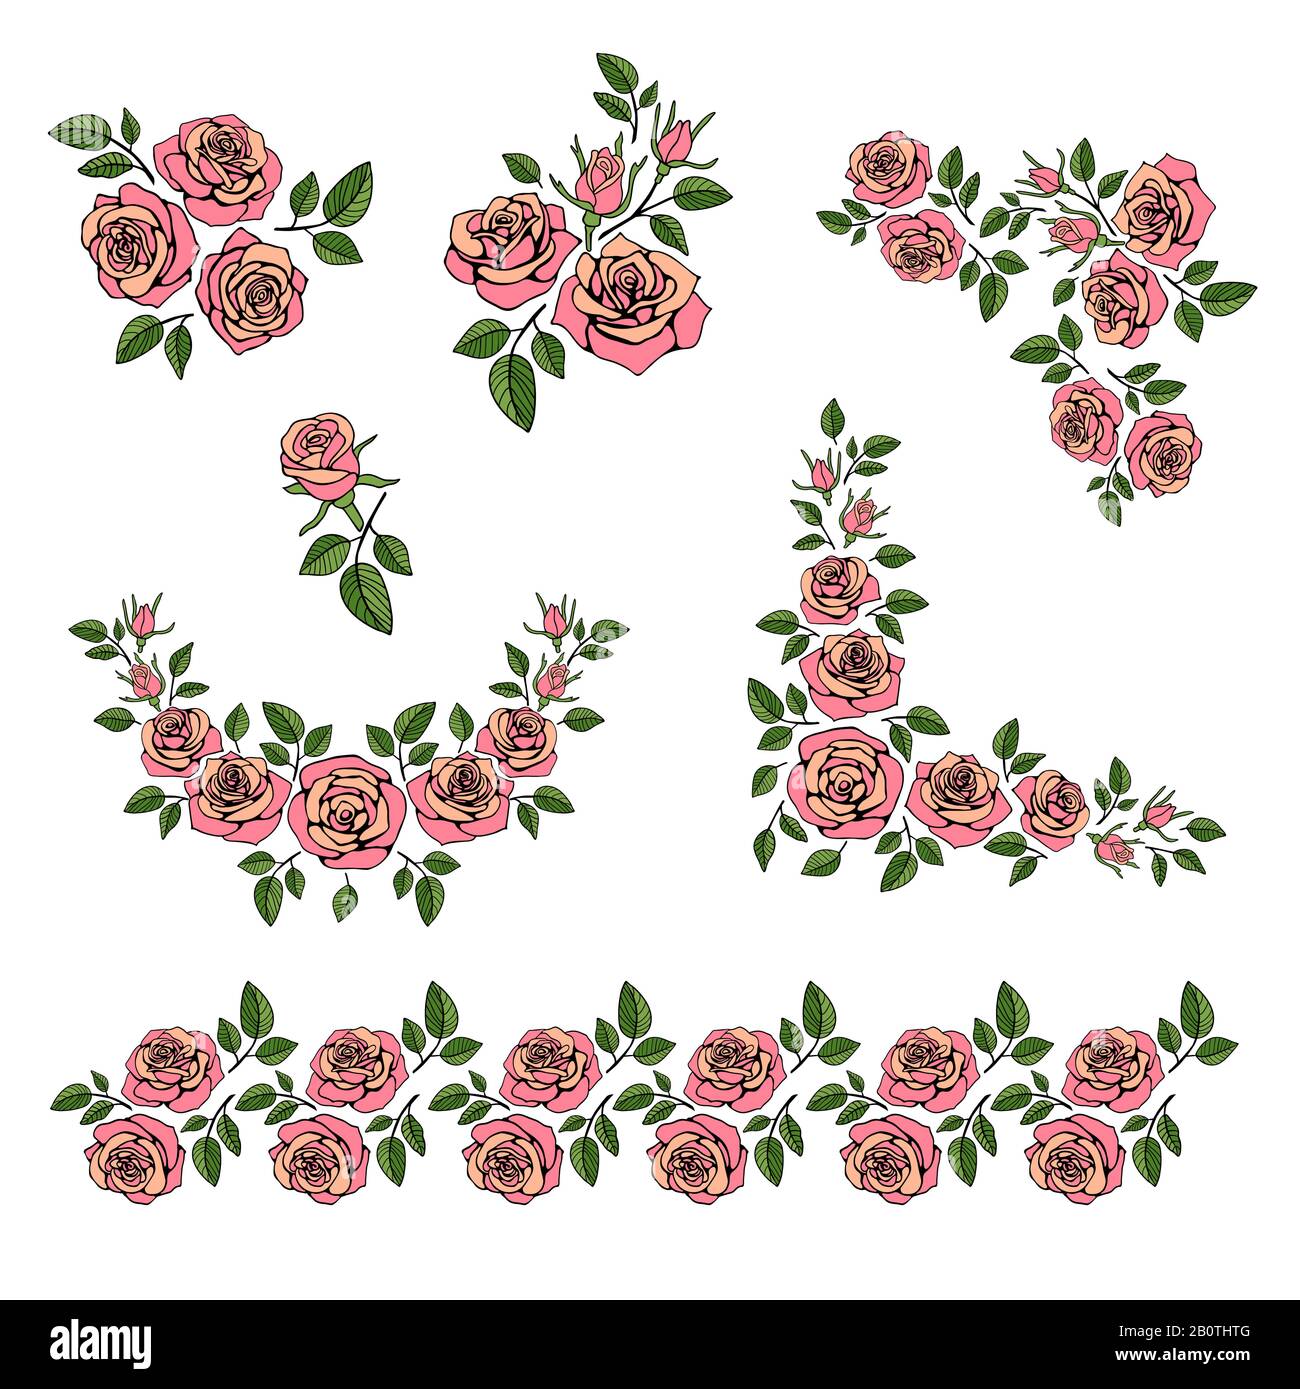 Romantischer Hochzeits-Blumenstrauß mit roten Rosen Vektor-Set. Teerosenblüte, Rahmenecke bilden Rosenillustration Stock Vektor